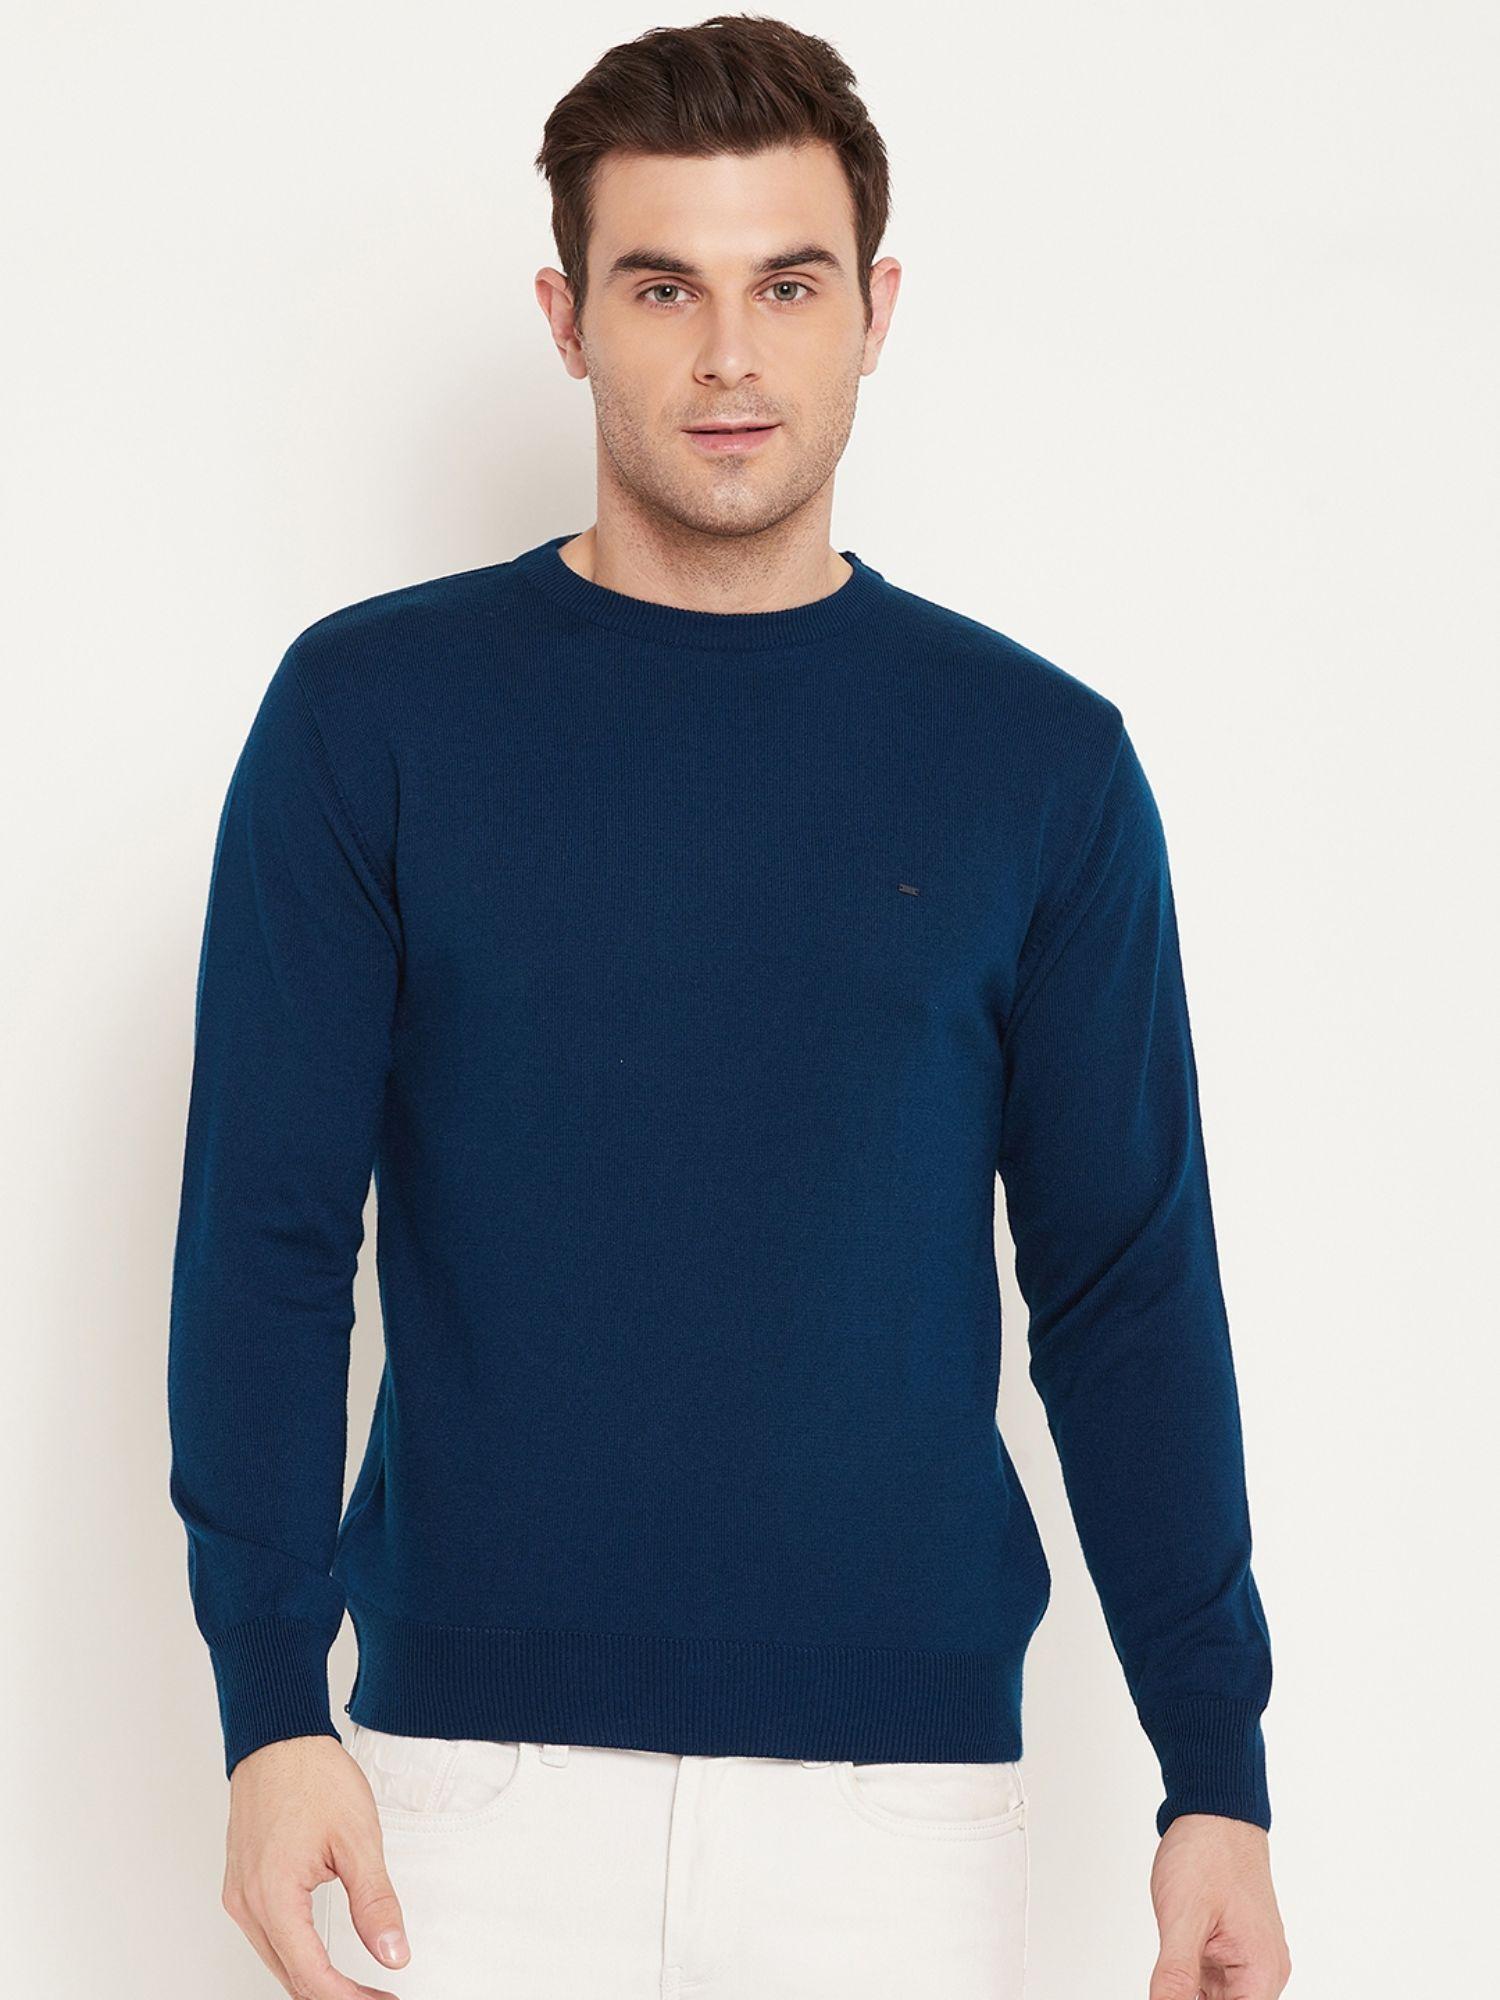 mens navy blue round neck sweaters